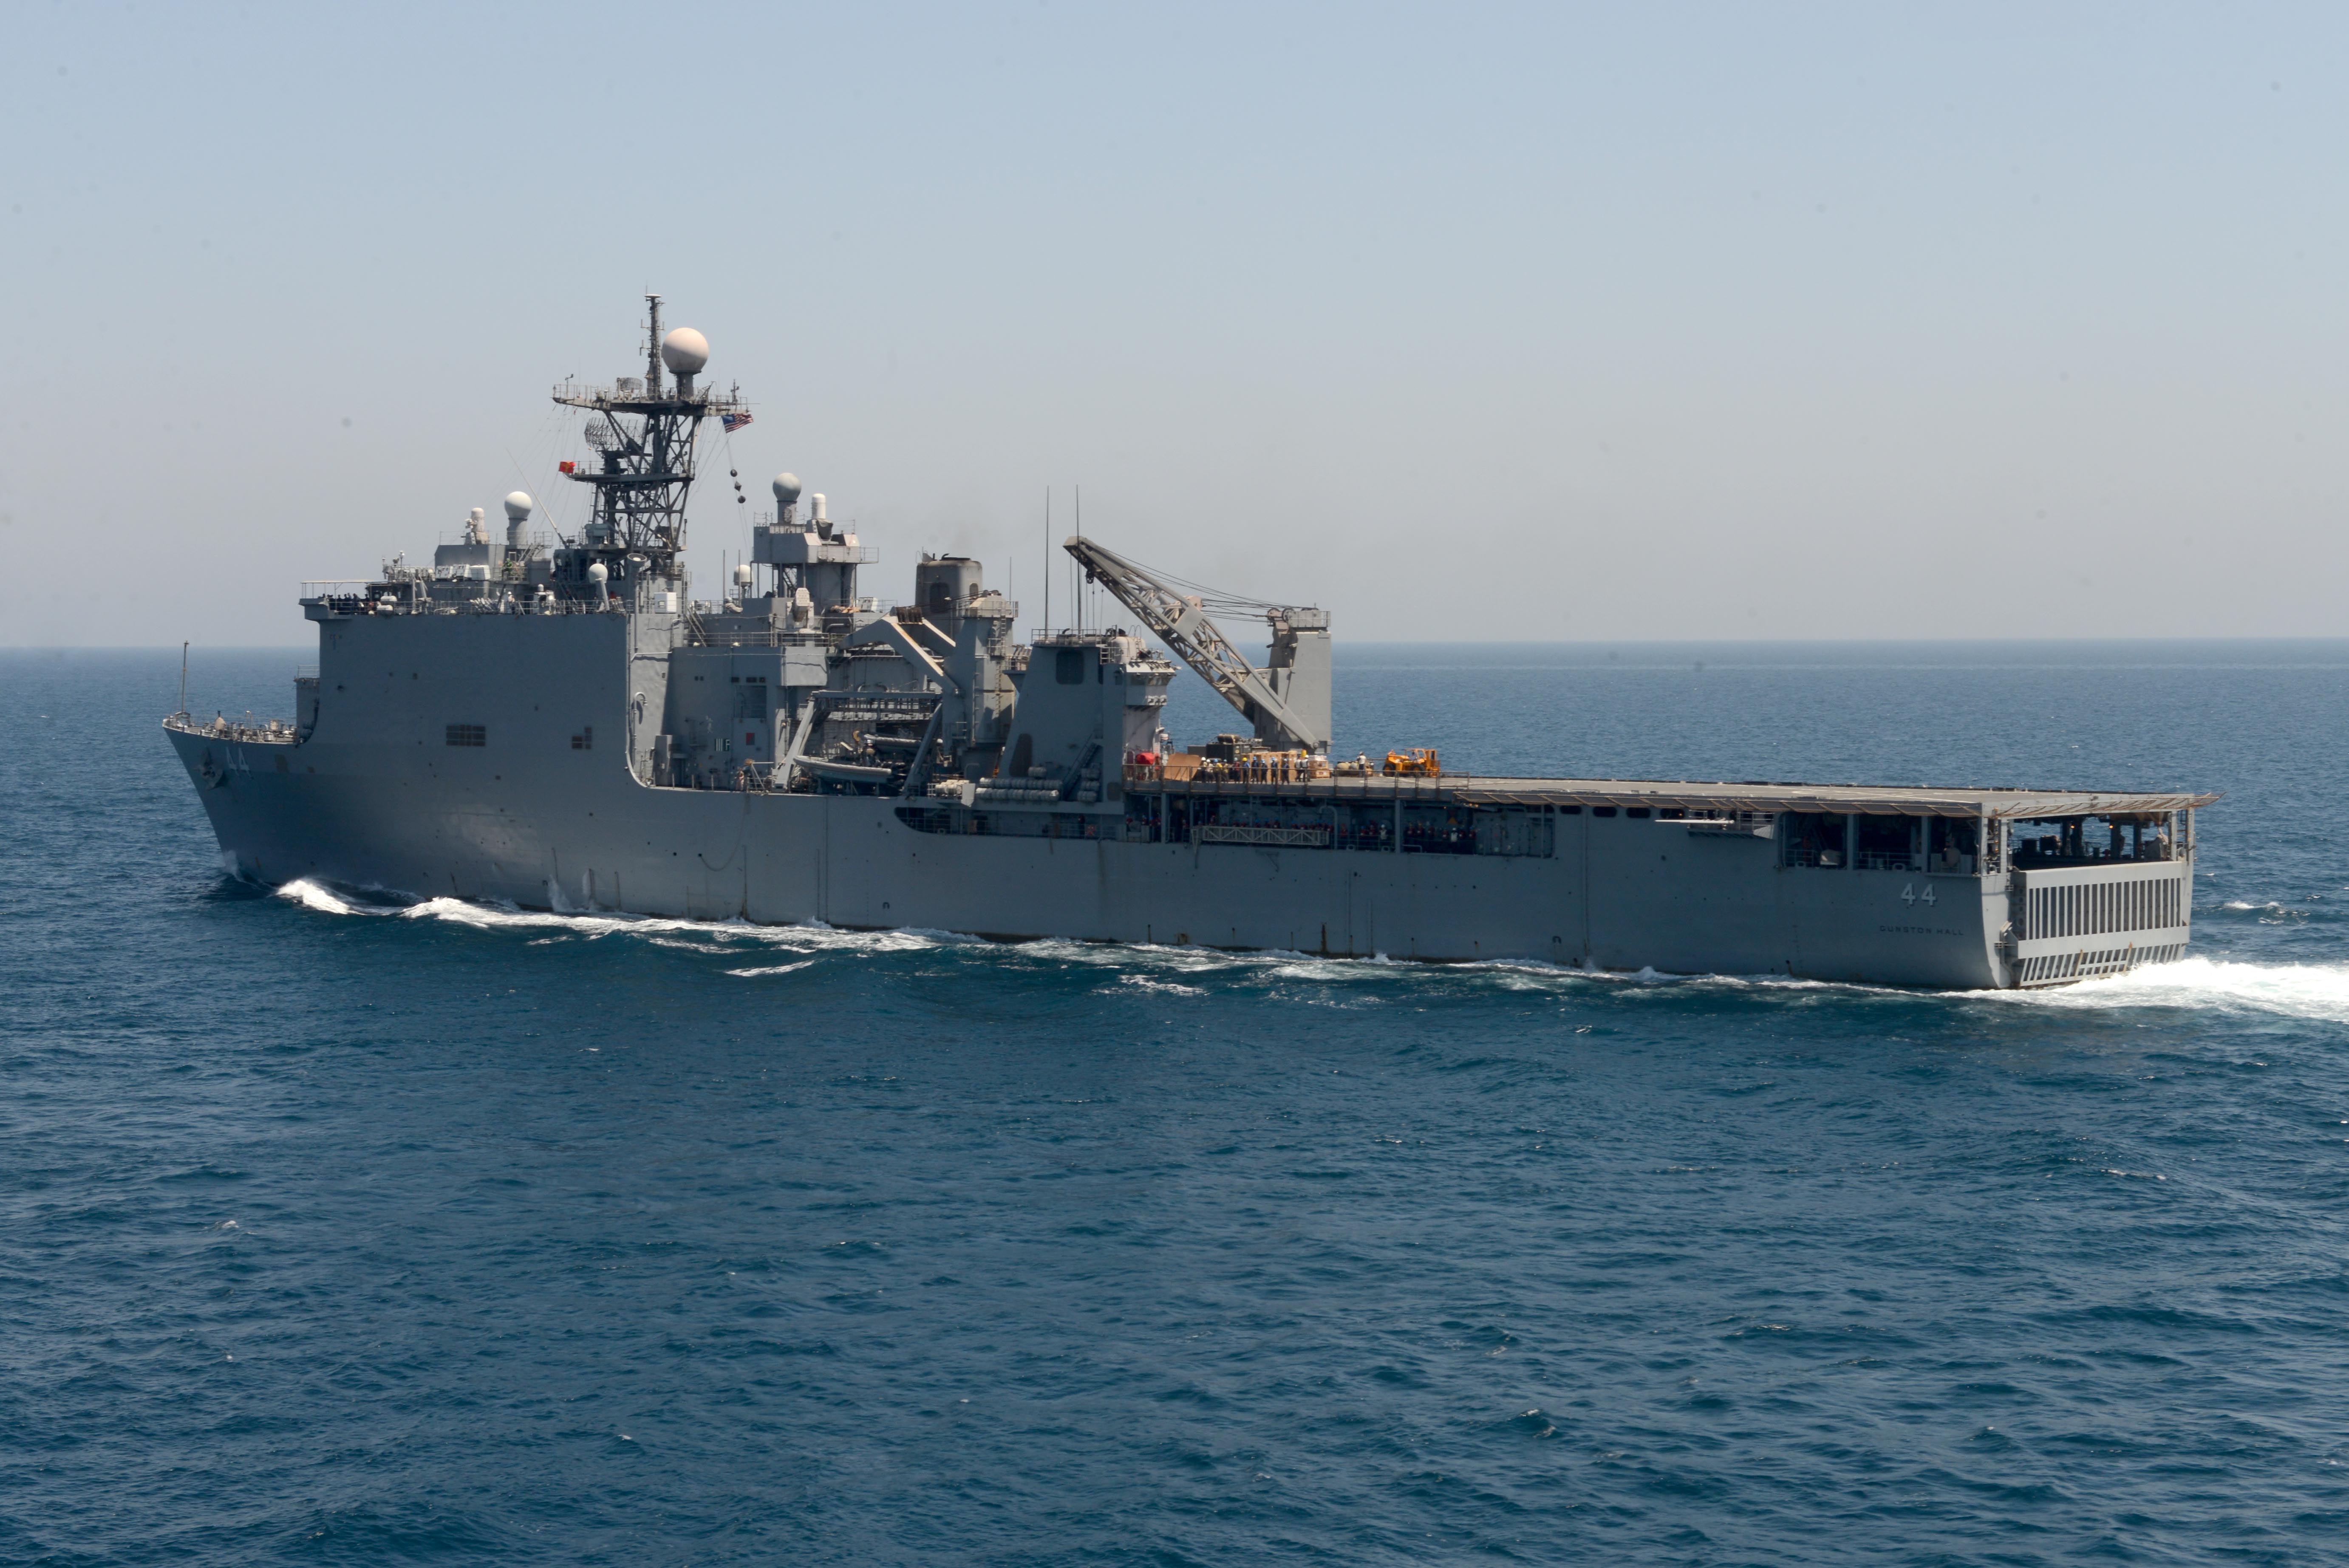 https://news.usni.org/2015/03/03/breaking-amphibious-warship-gunston-hall-suffers-3-hour-fire-at-pier/bataan-amphibious-ready-group-2014-deployment-8